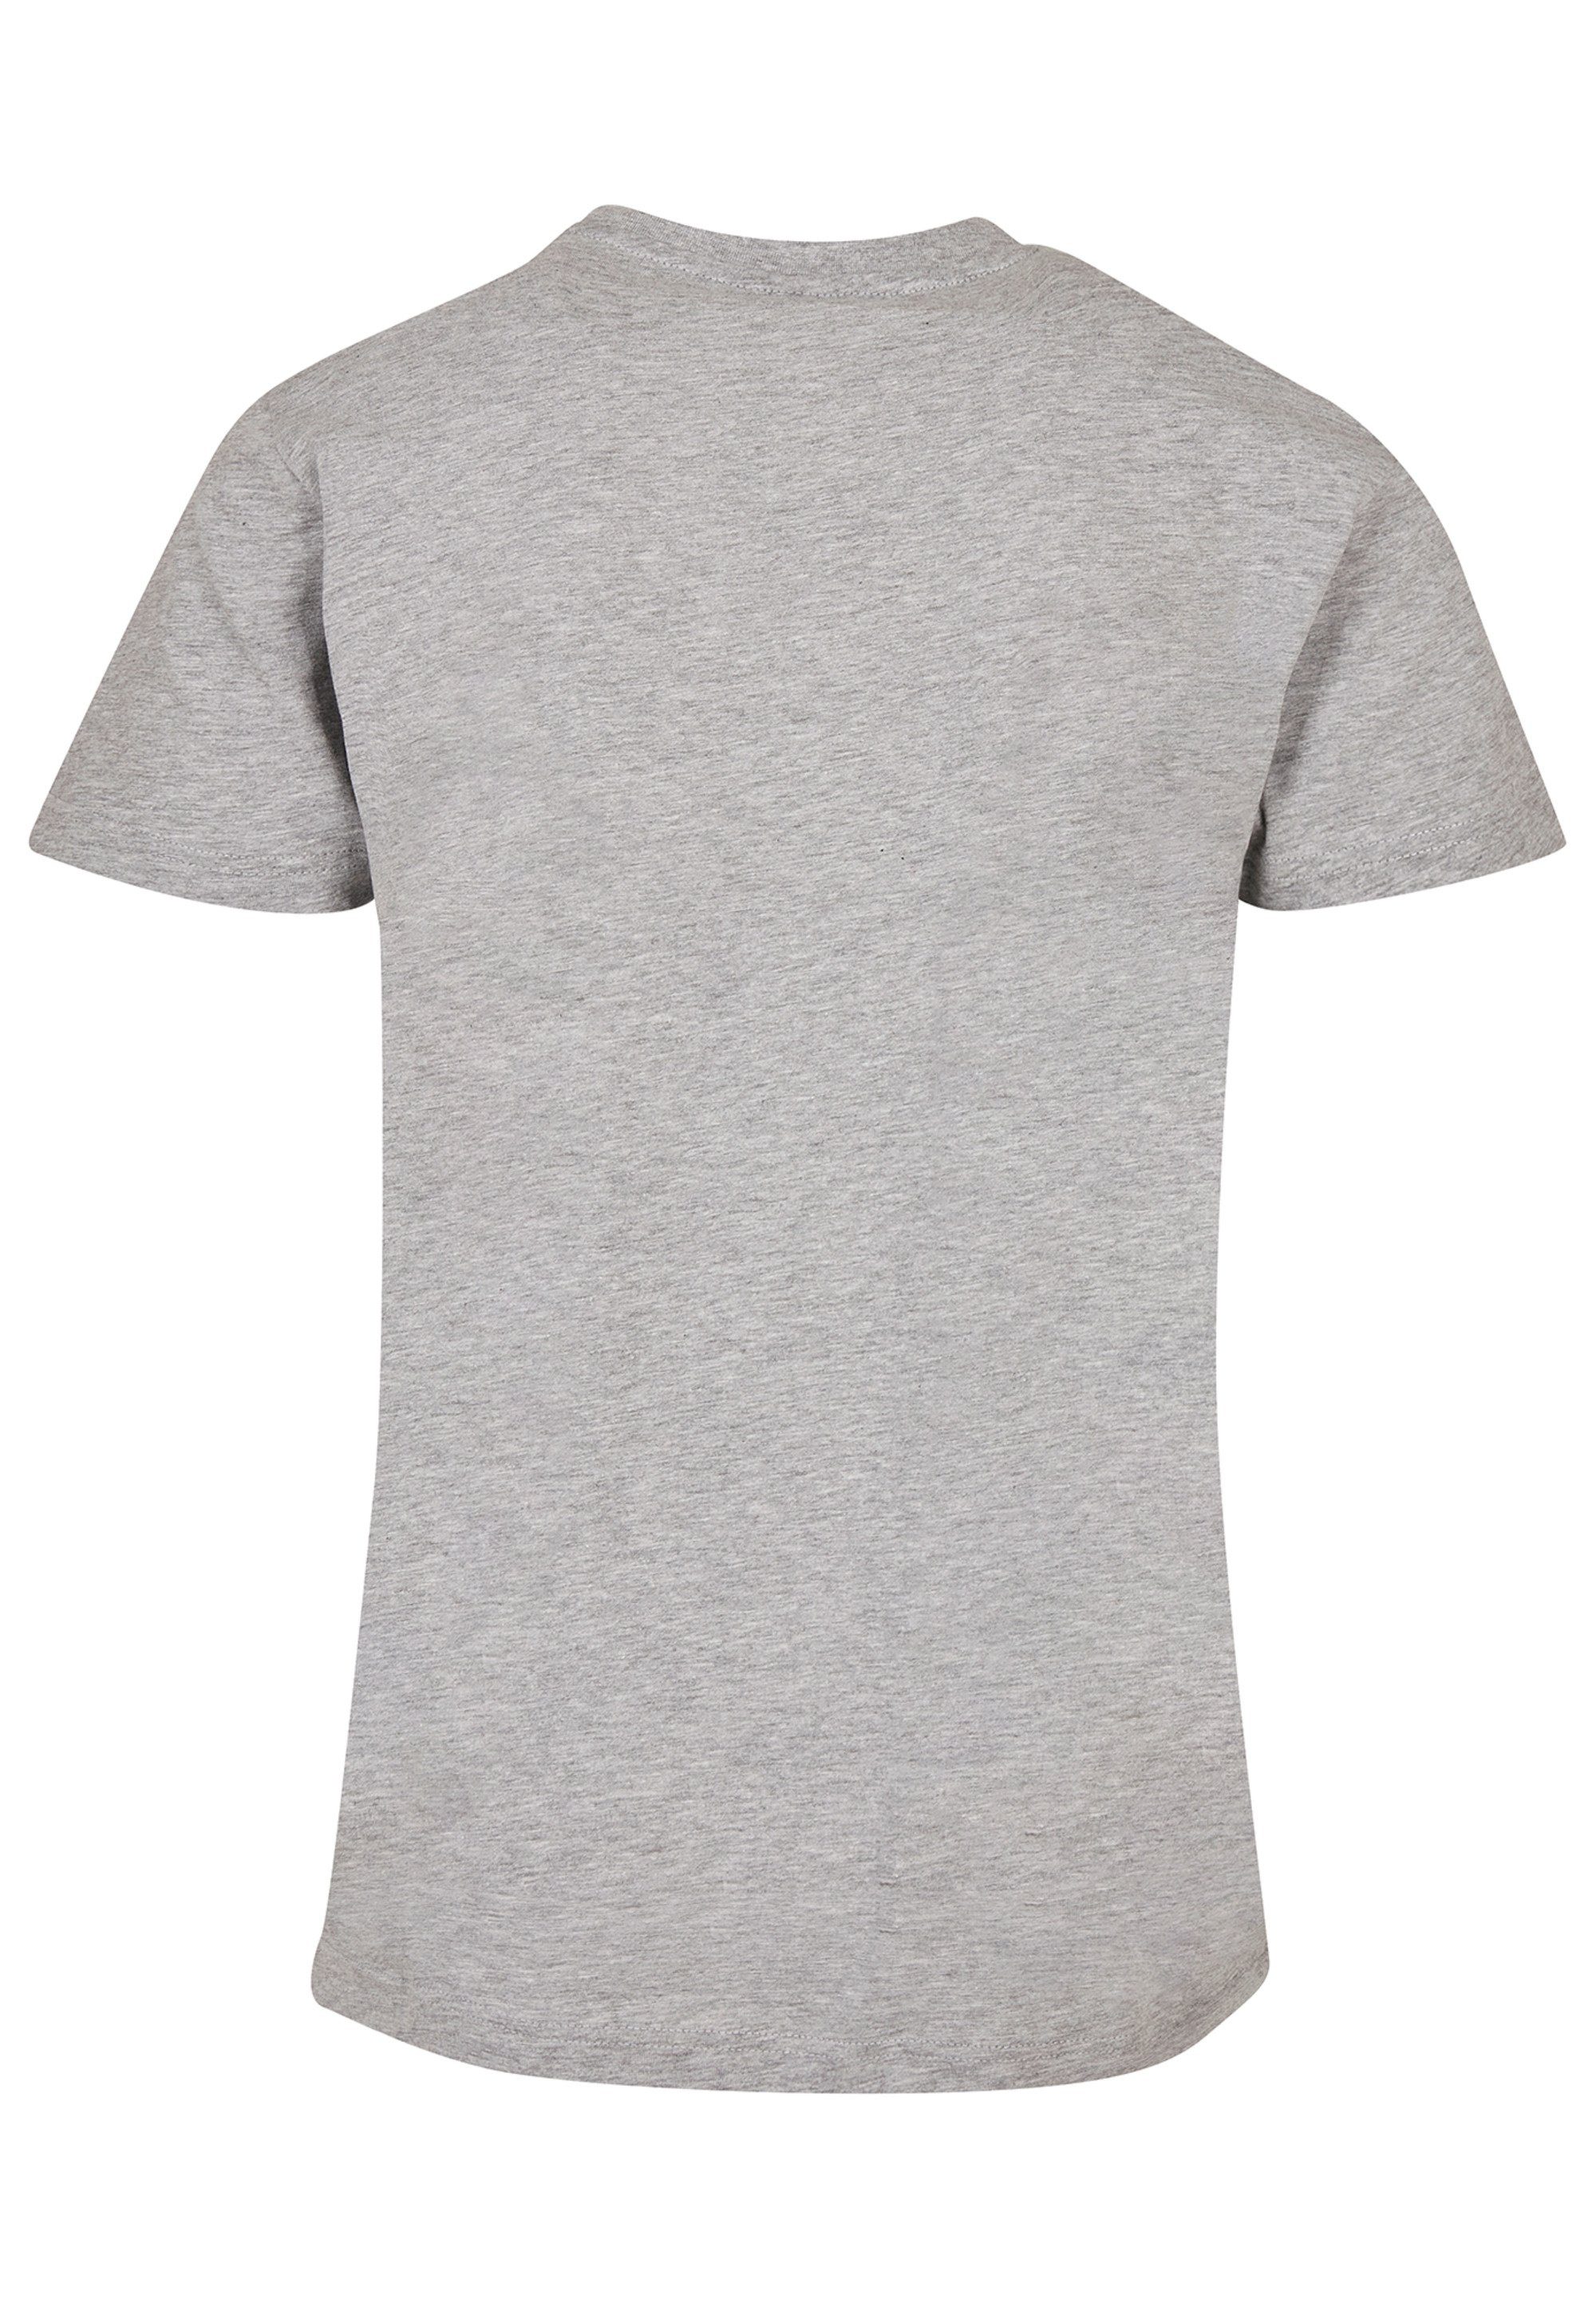 F4NT4STIC T-Shirt UNISEX Print heather LA Downtown grey TEE